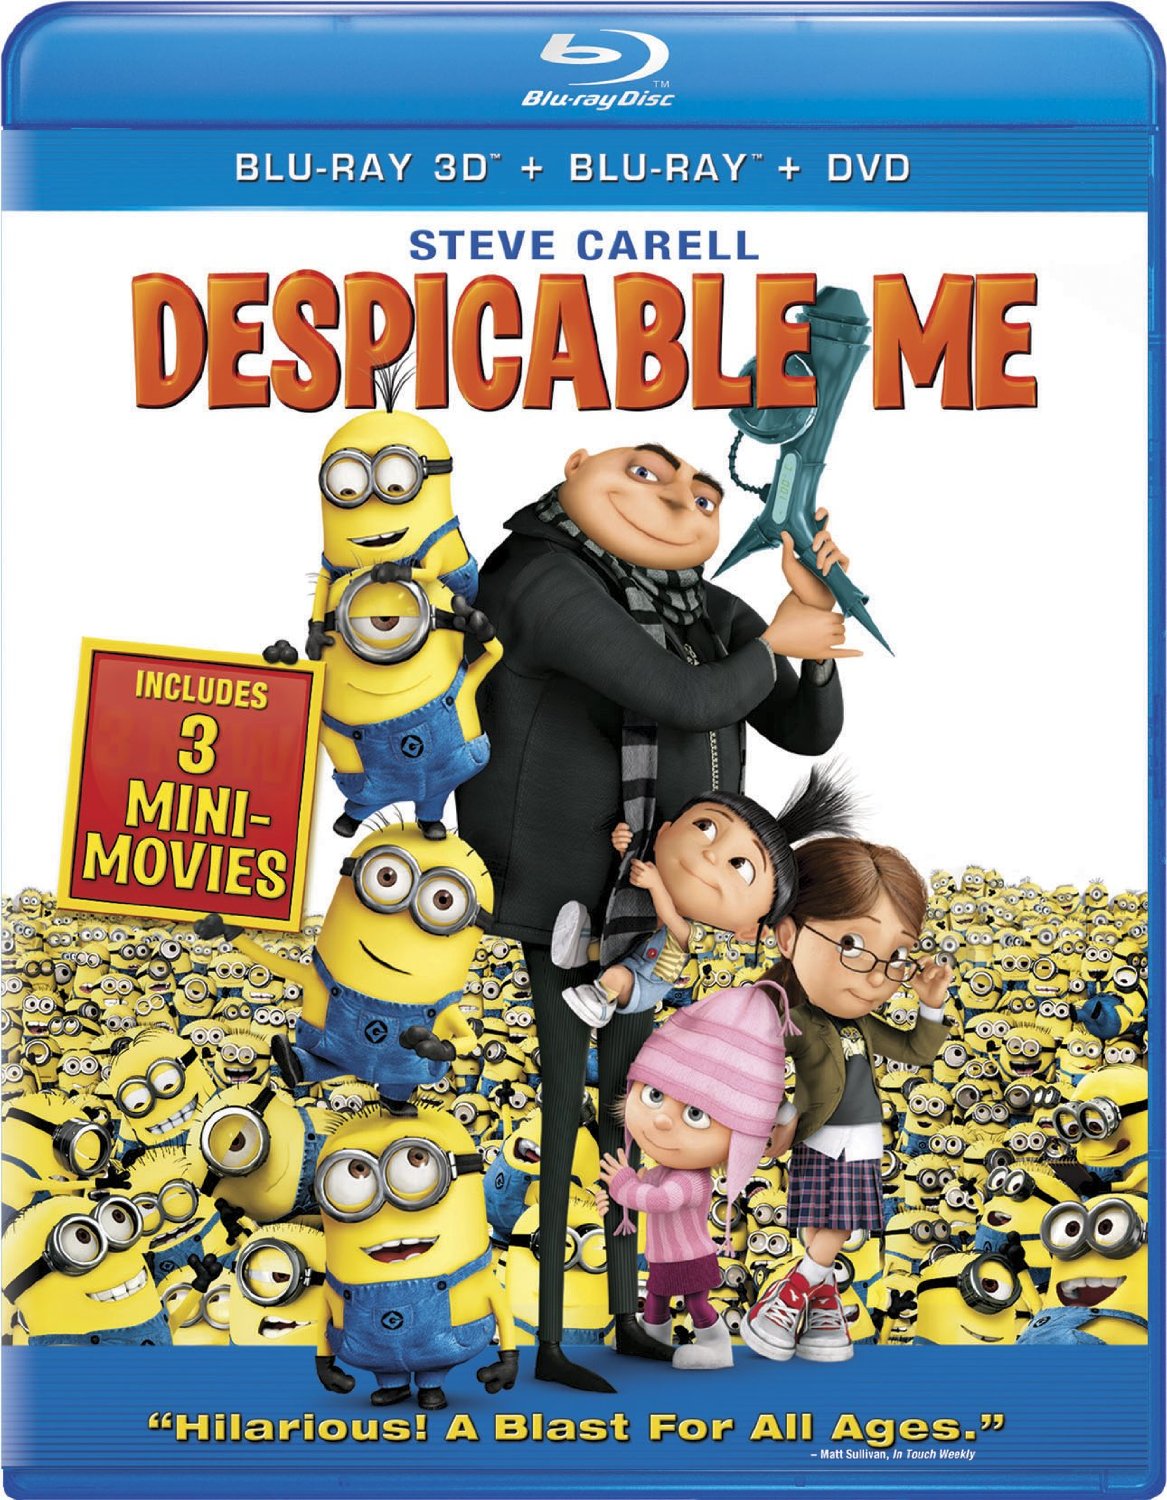 Despicable Me (Blu-Ray 3D) (3 Disc) (3-D) (Ultraviolet Digital Copy) (Eng/Spa/Fre) 2010